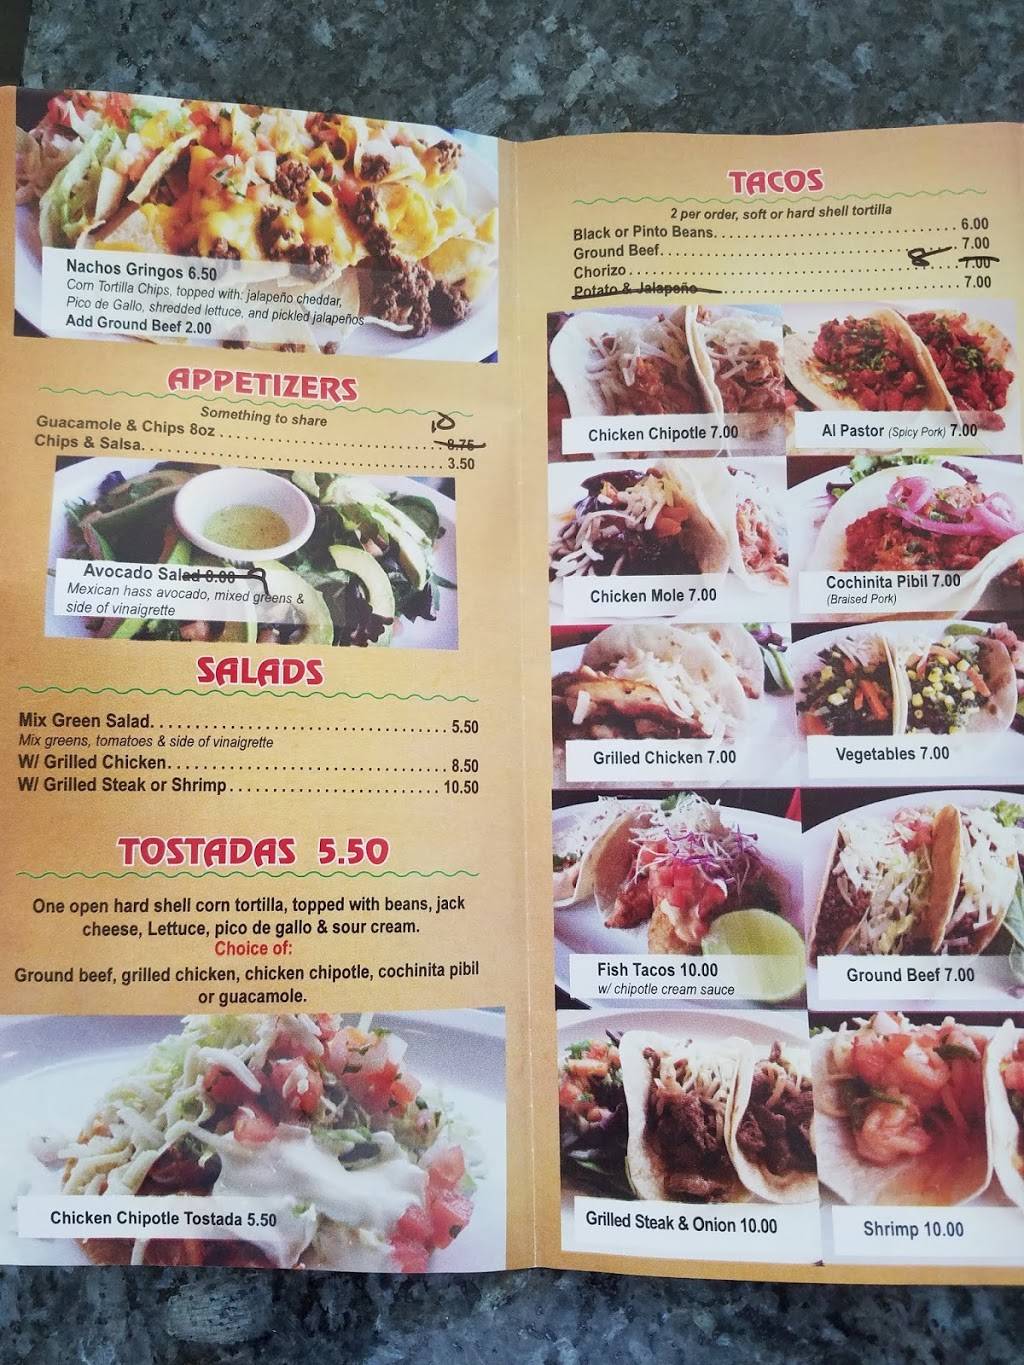 The Great Burrito | restaurant | 10 Hilliard Ave, Edgewater, NJ 07020, USA | 2018408778 OR +1 201-840-8778